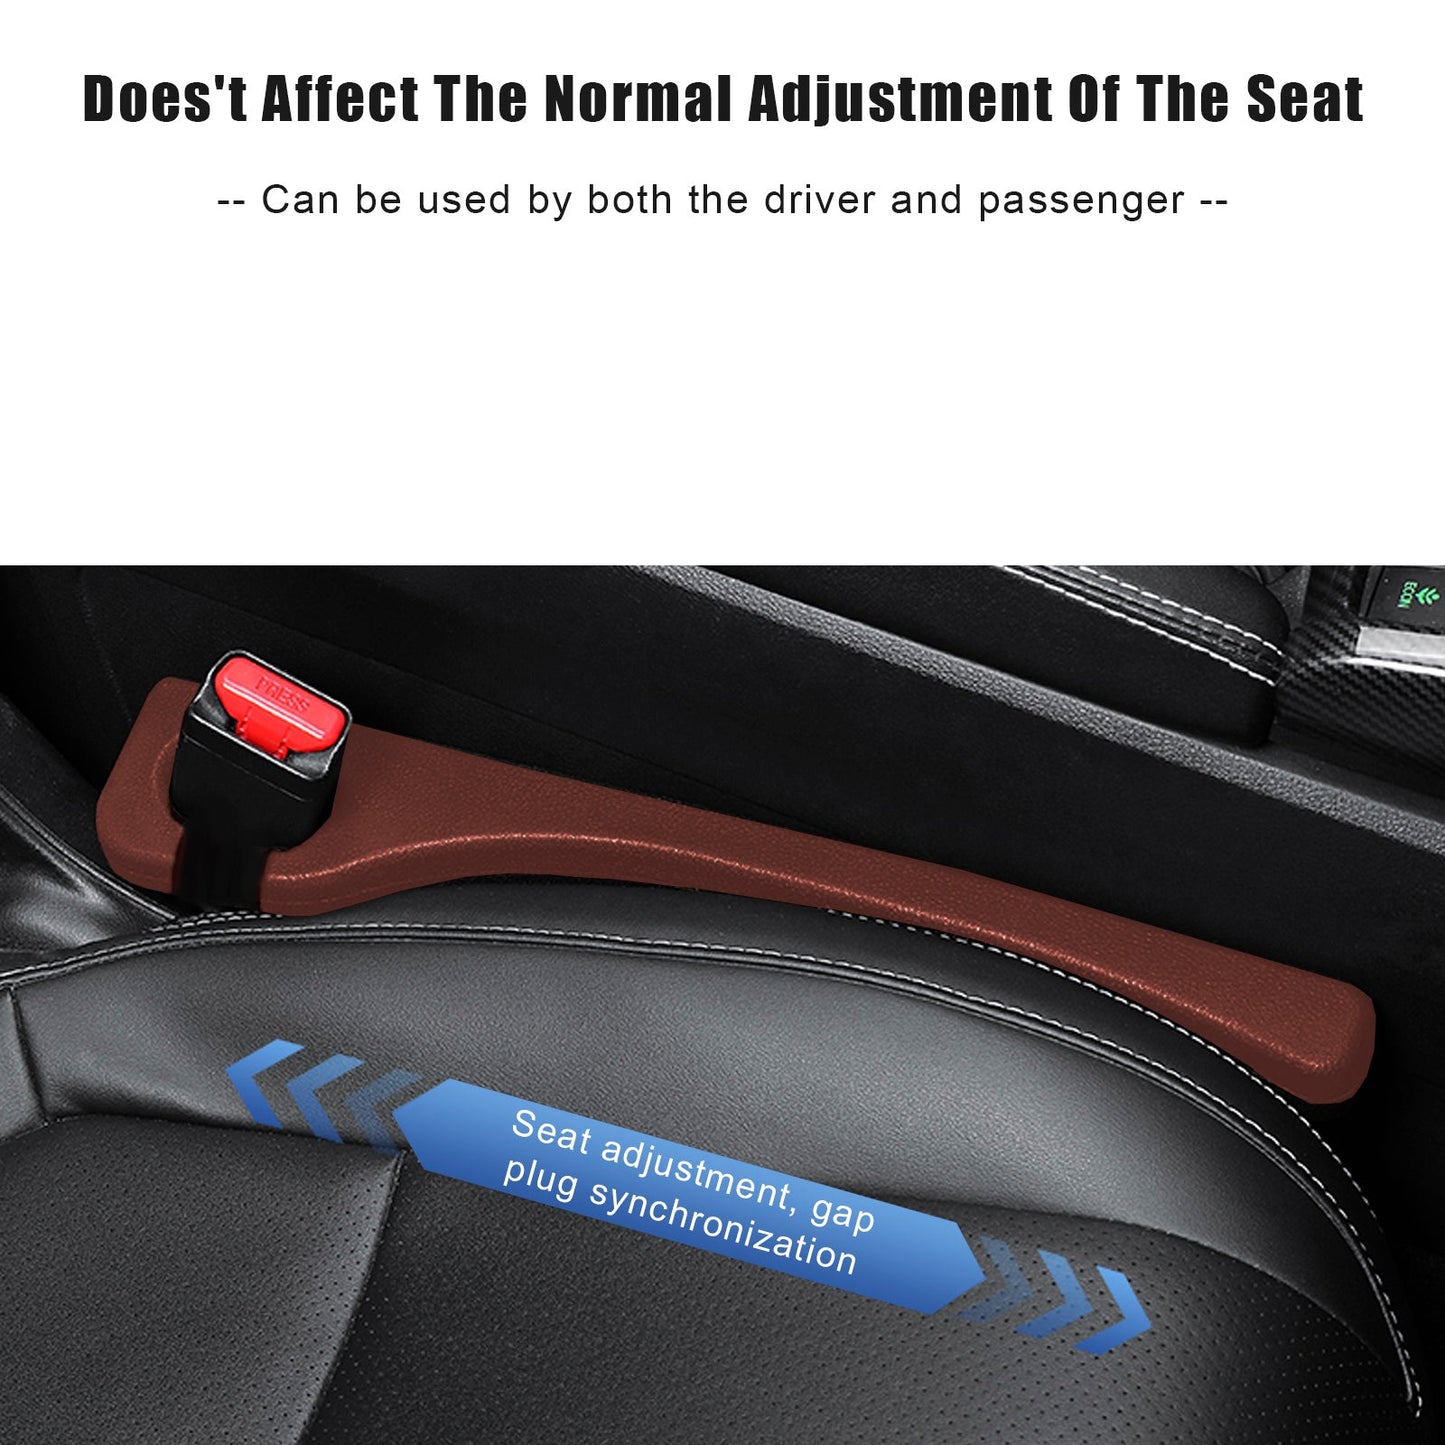 Claret Car Seat Gaps Filler Crevice Blocker Console Side Fill Strip Universal